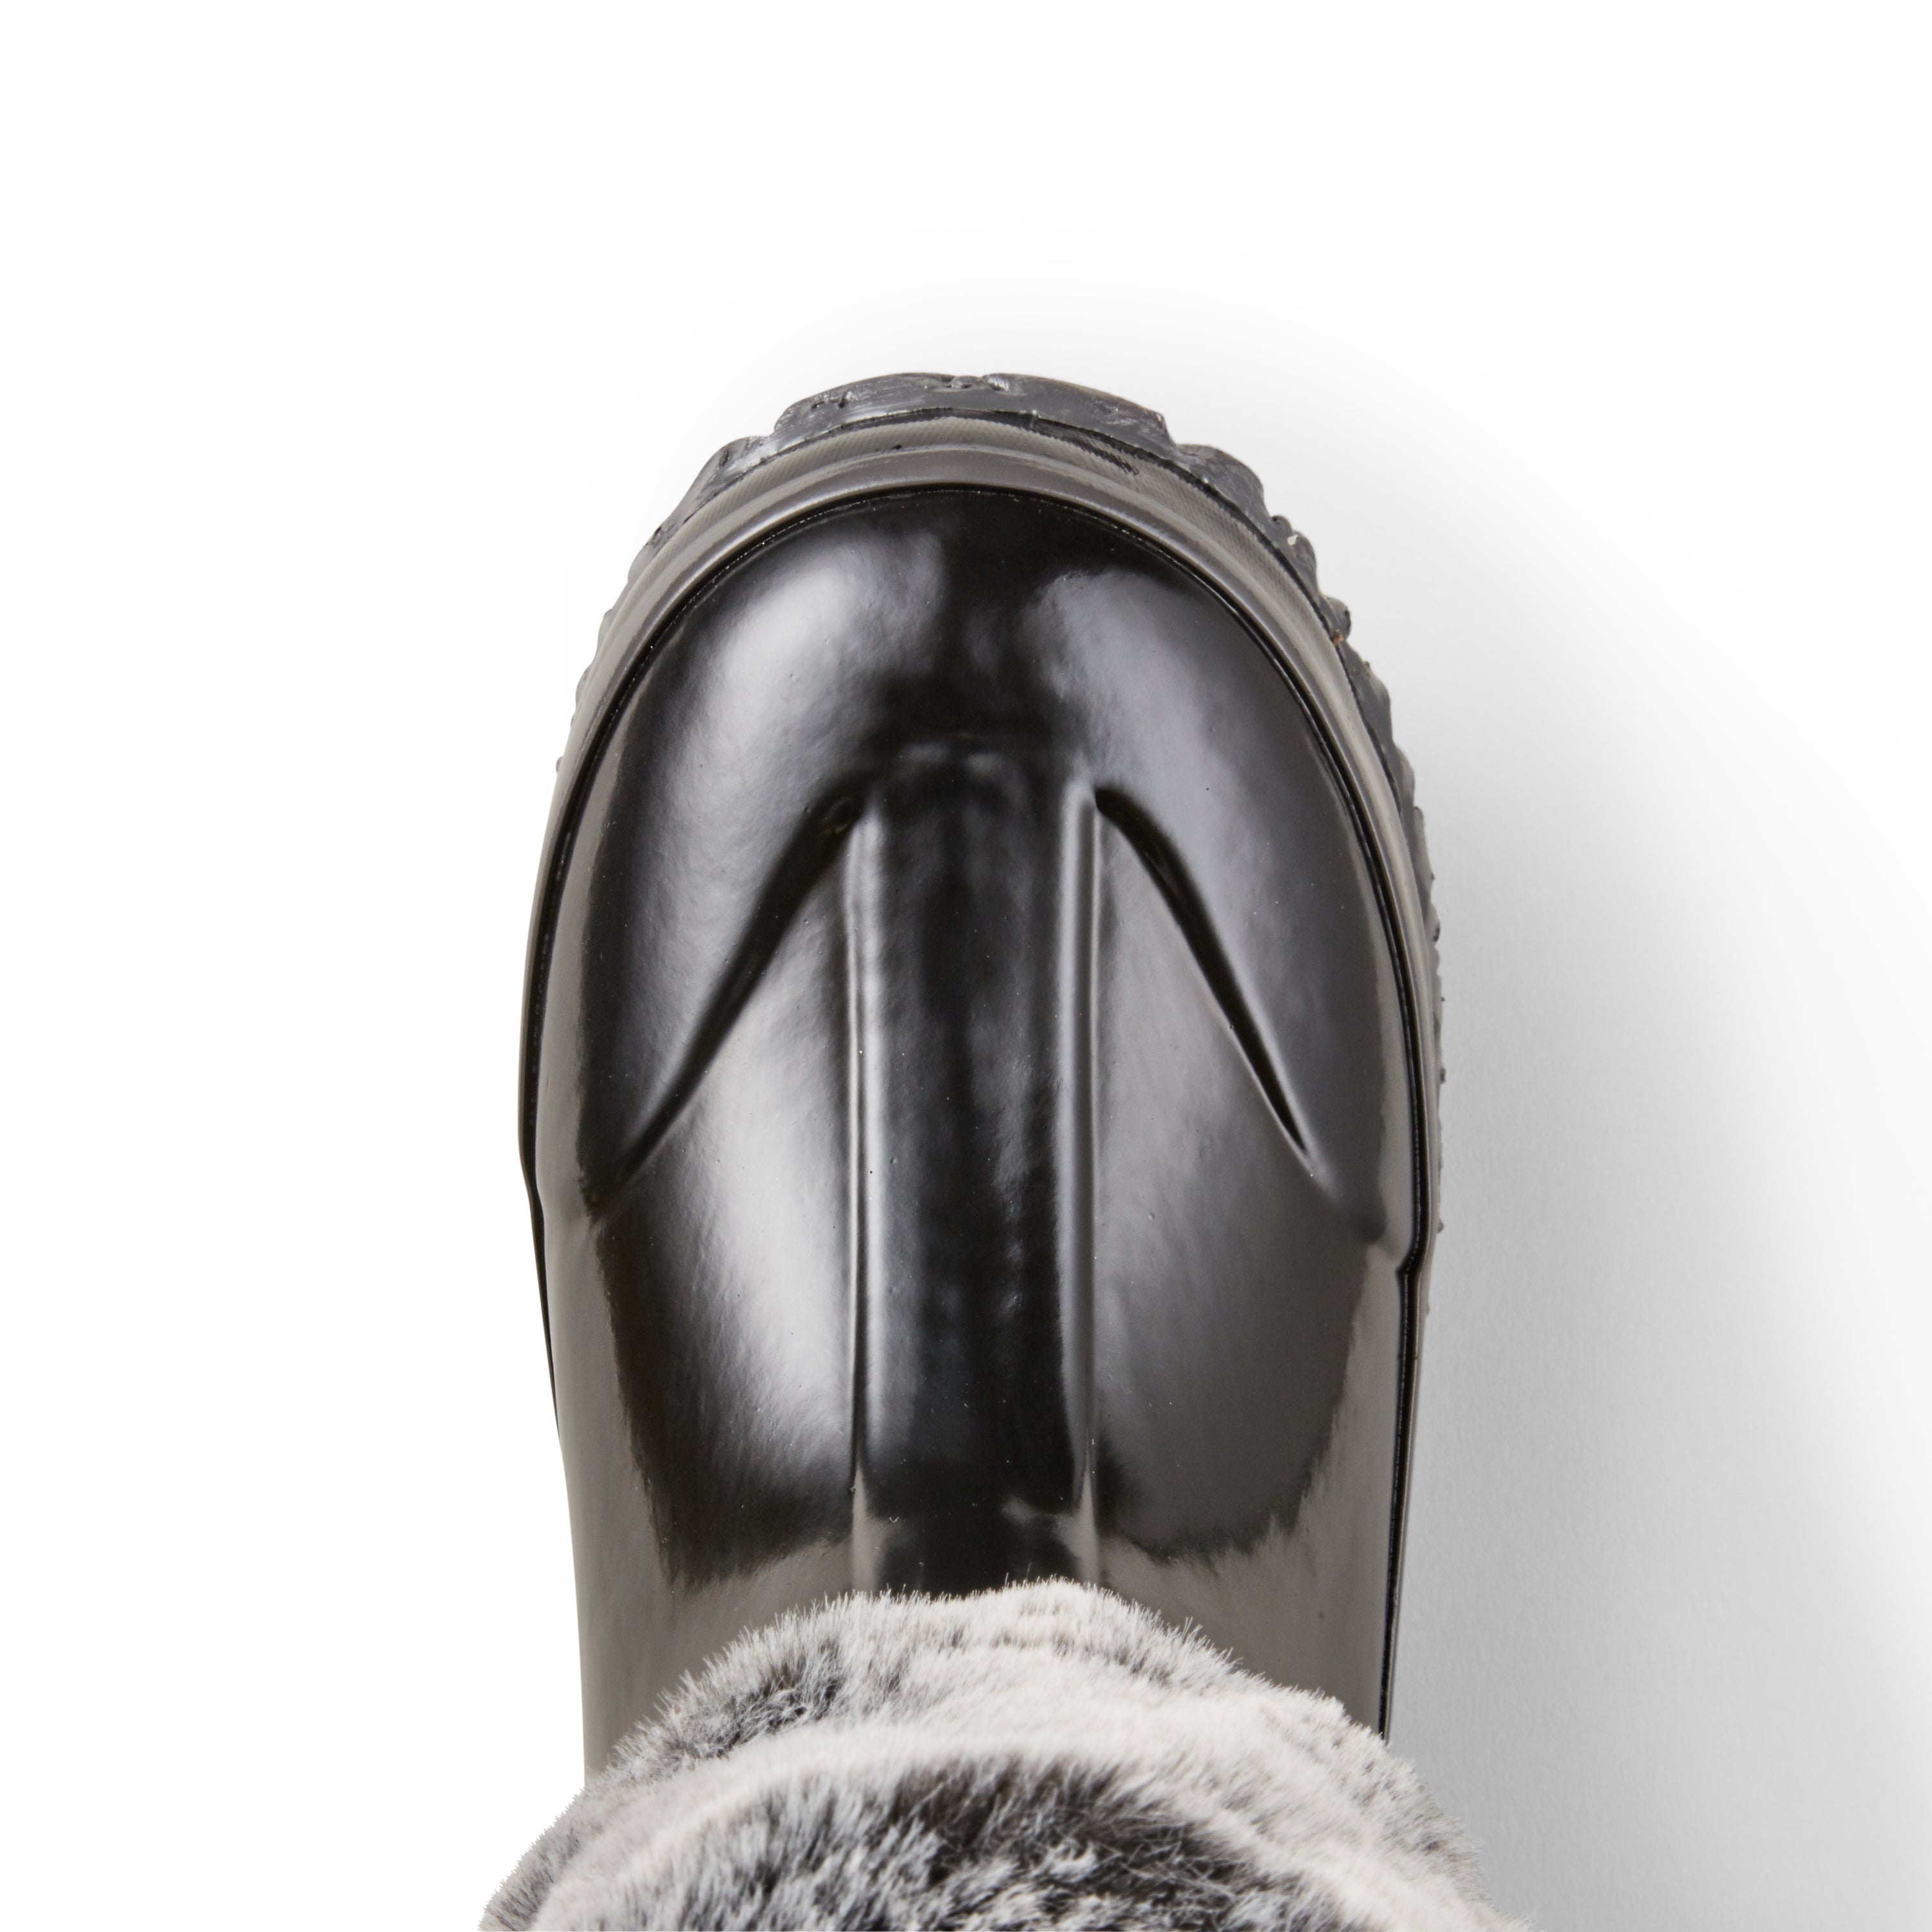 Cougar Snuggle Kid's Black Rubber/ Neoprene Winter Boot